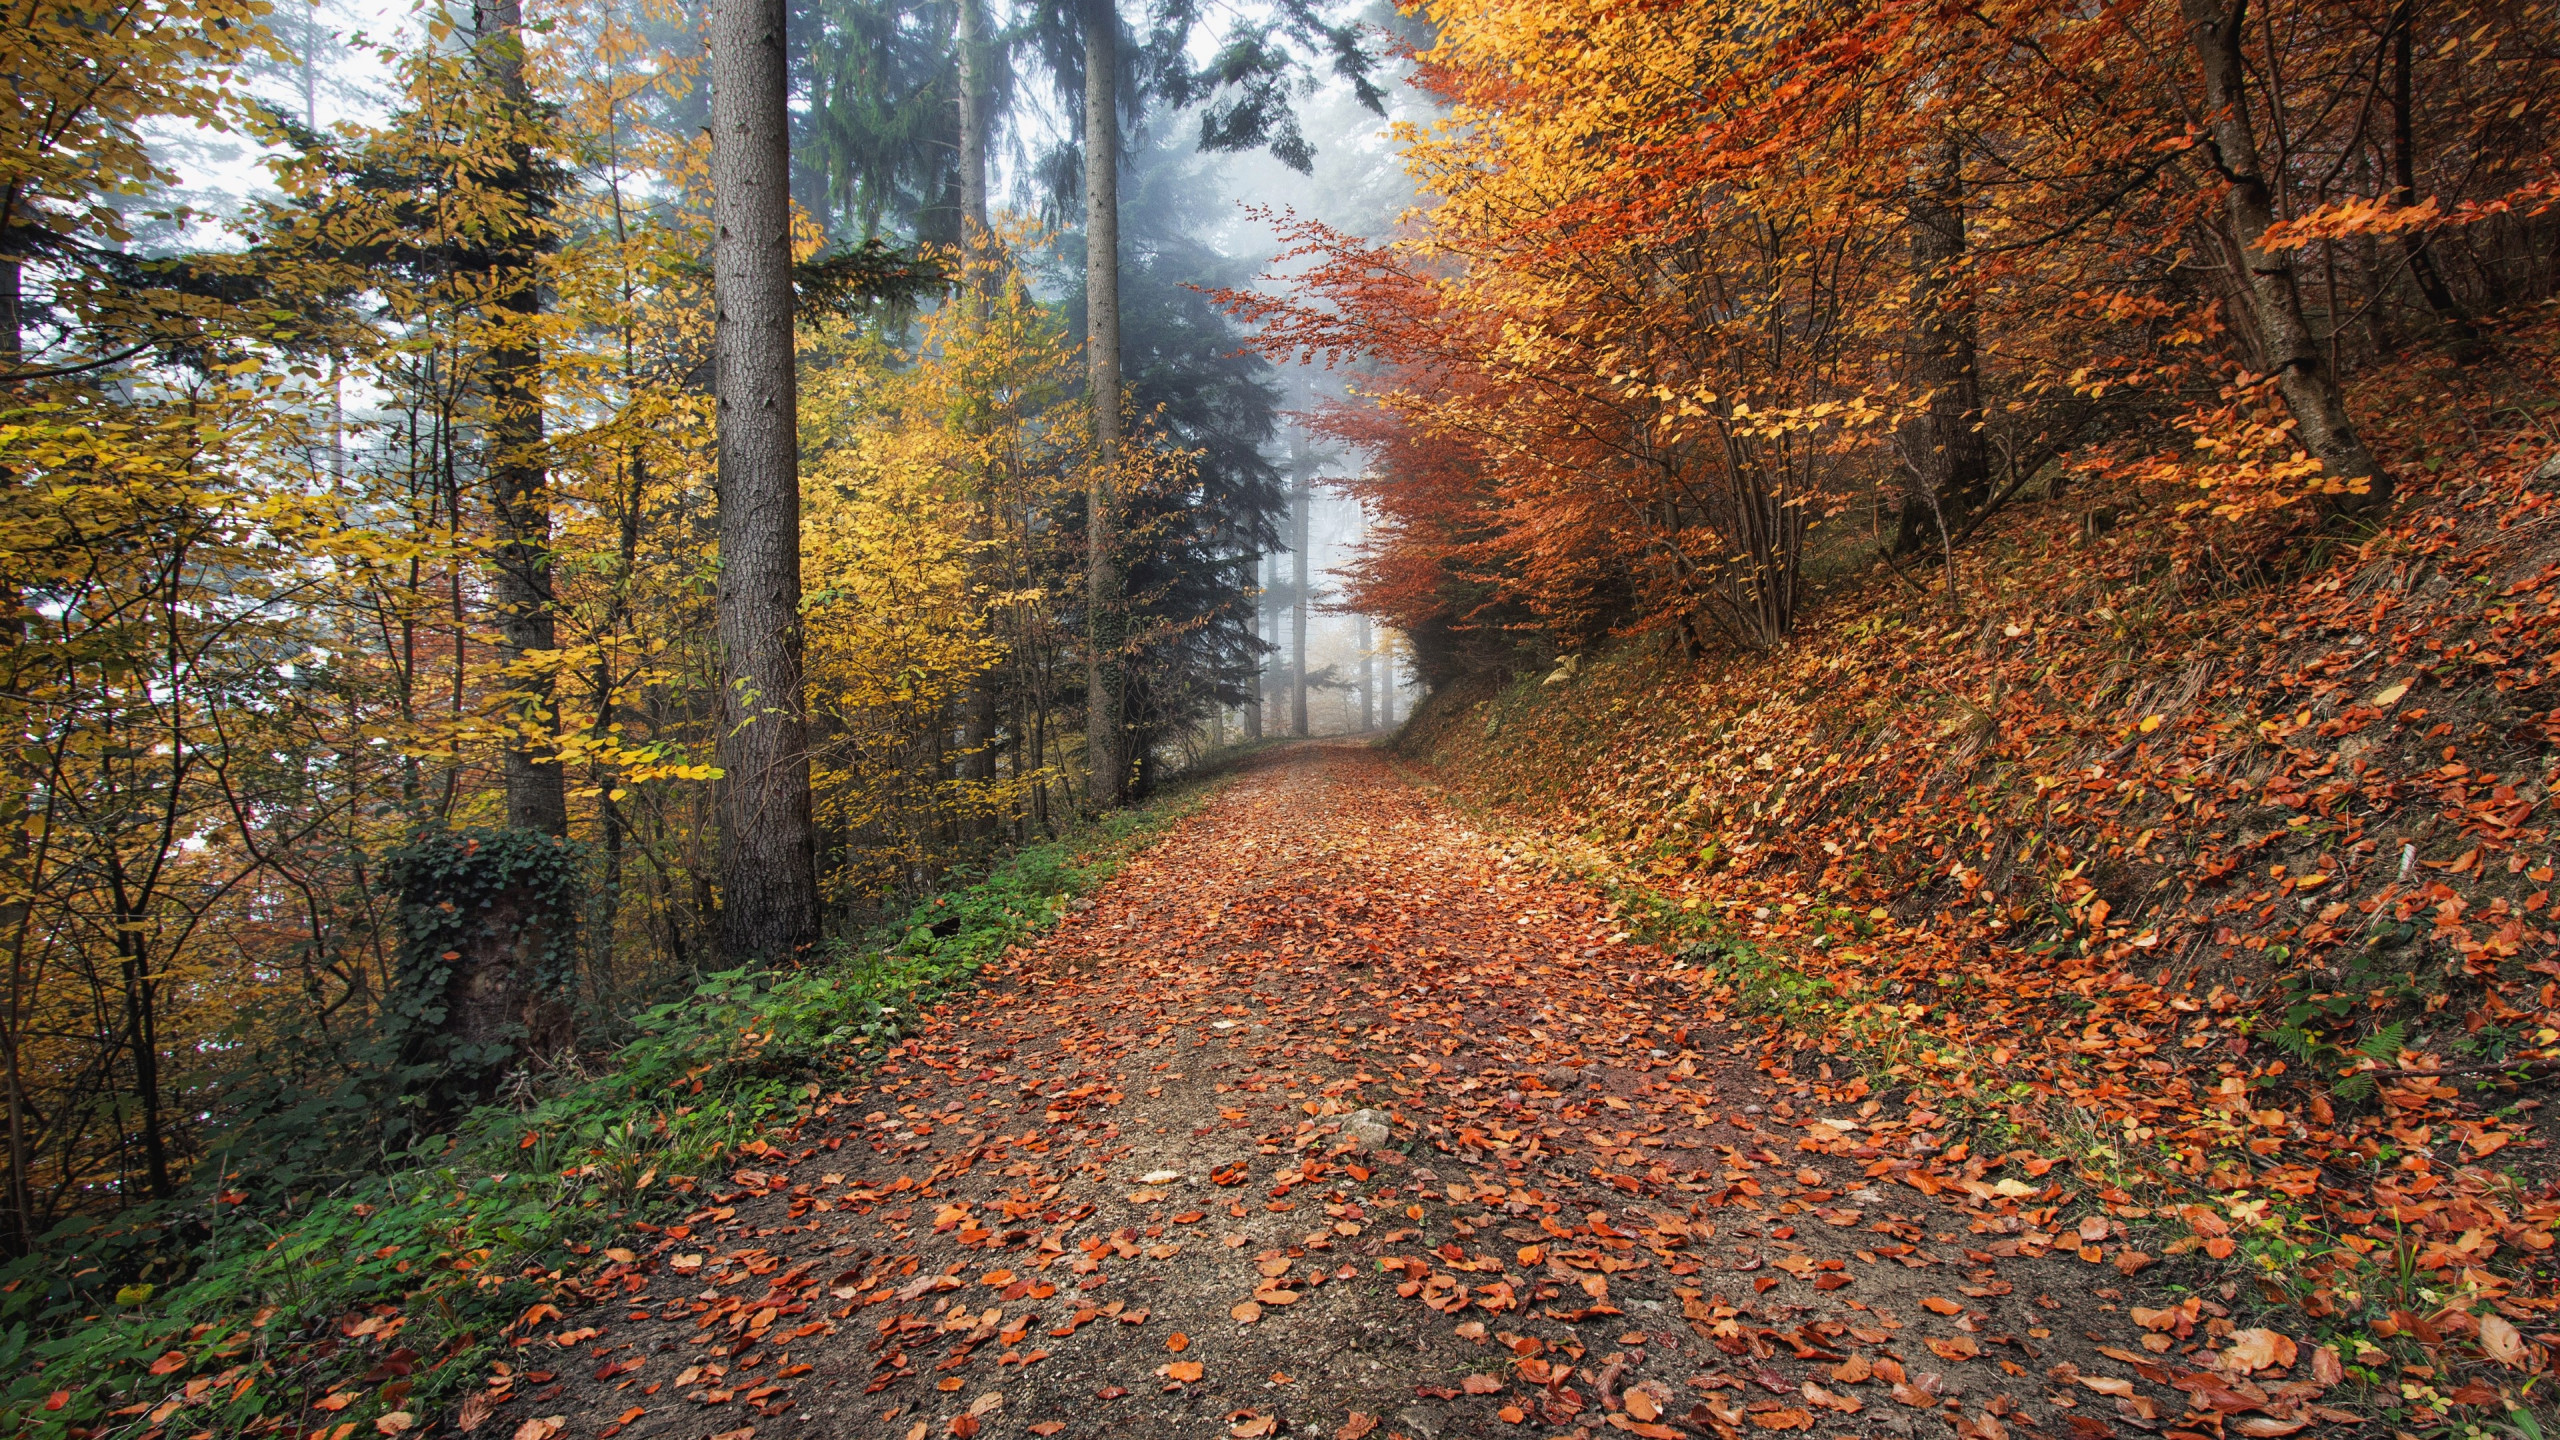 Download wallpaper: How nature looks Autumn in Kirchzarten, Germany 2560x1440